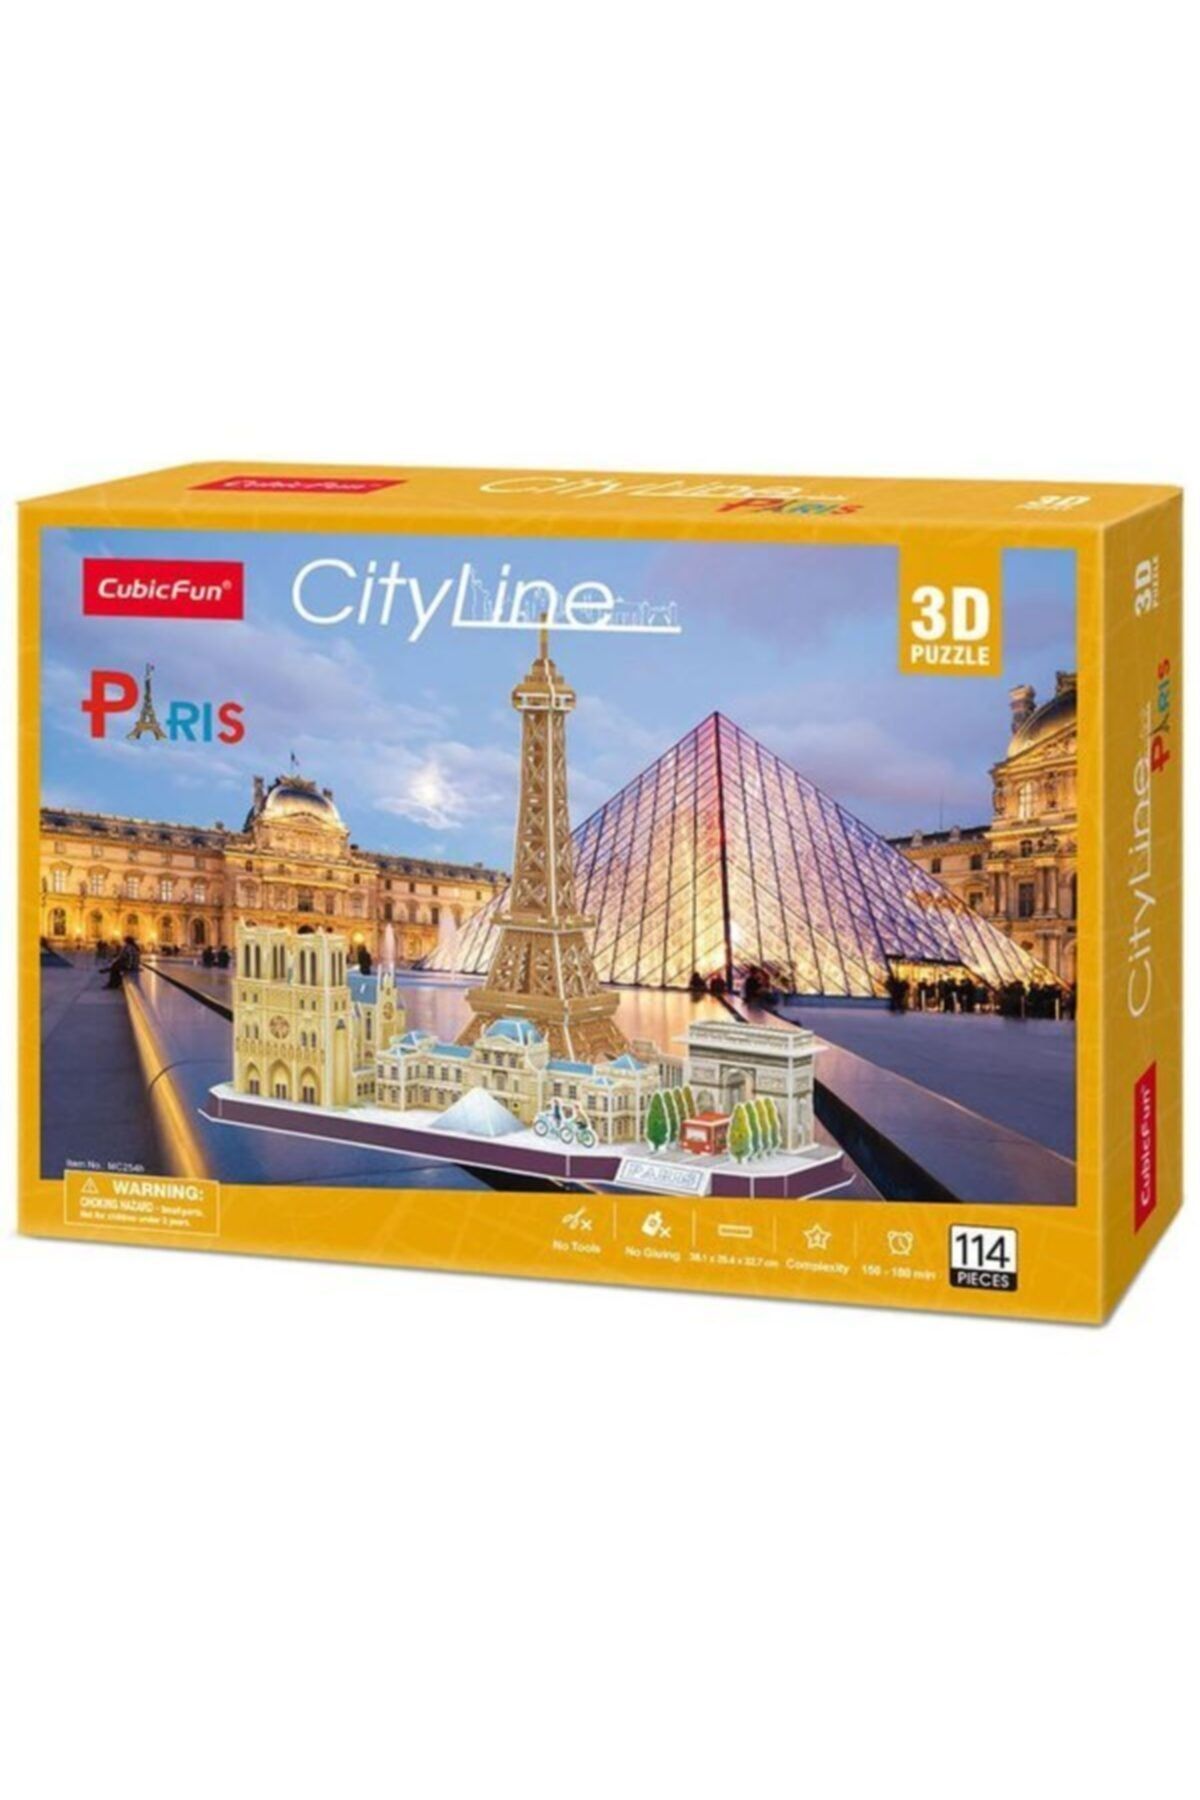 Cubic Fun Cubicfun-3d Puz.city Line Paris - Fransa